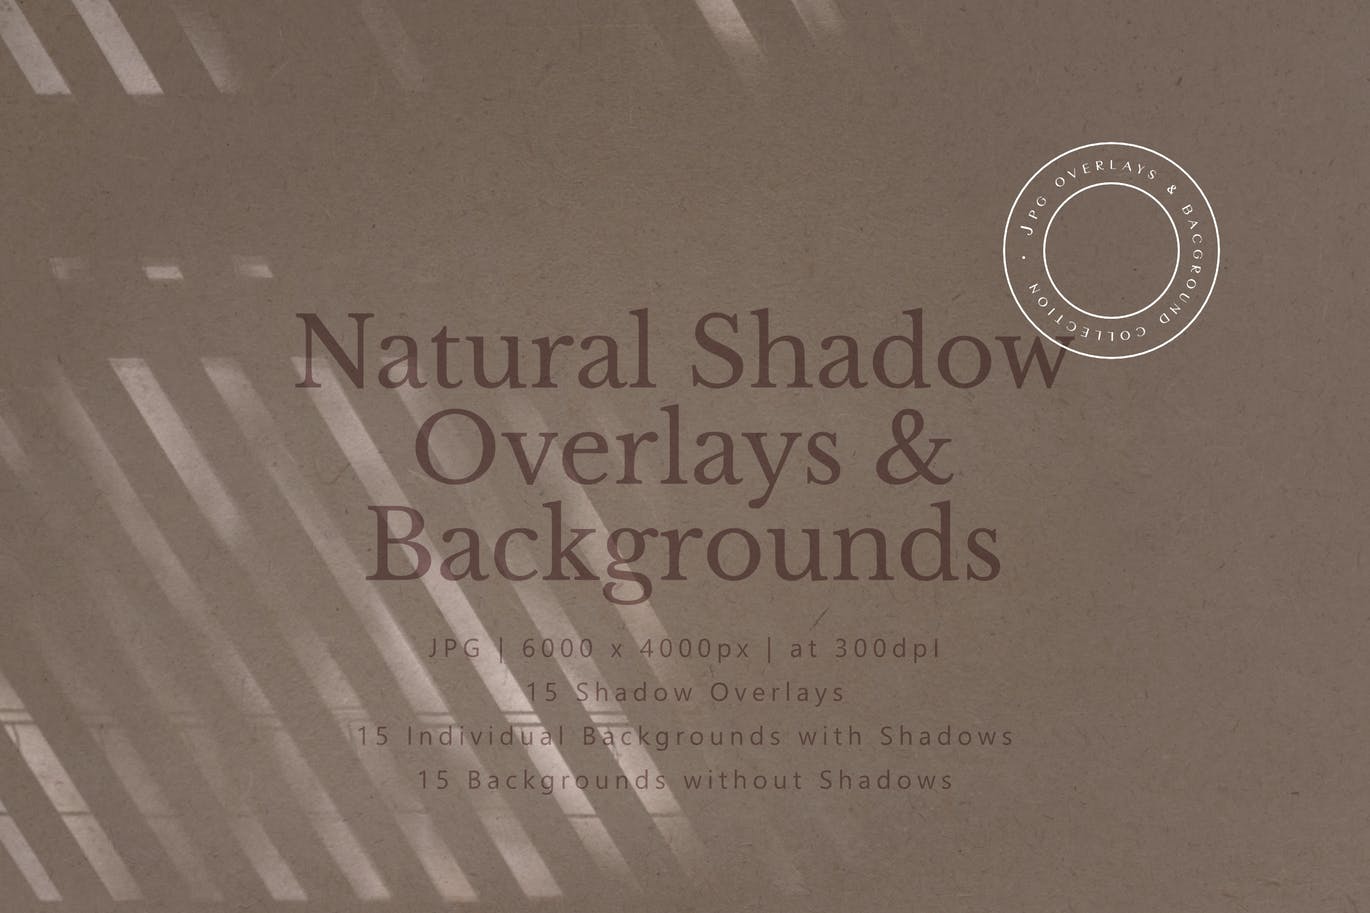 自然阳光阴影叠层和背景素材 Natural Shadow Overlays and Backgrounds 图片素材 第1张